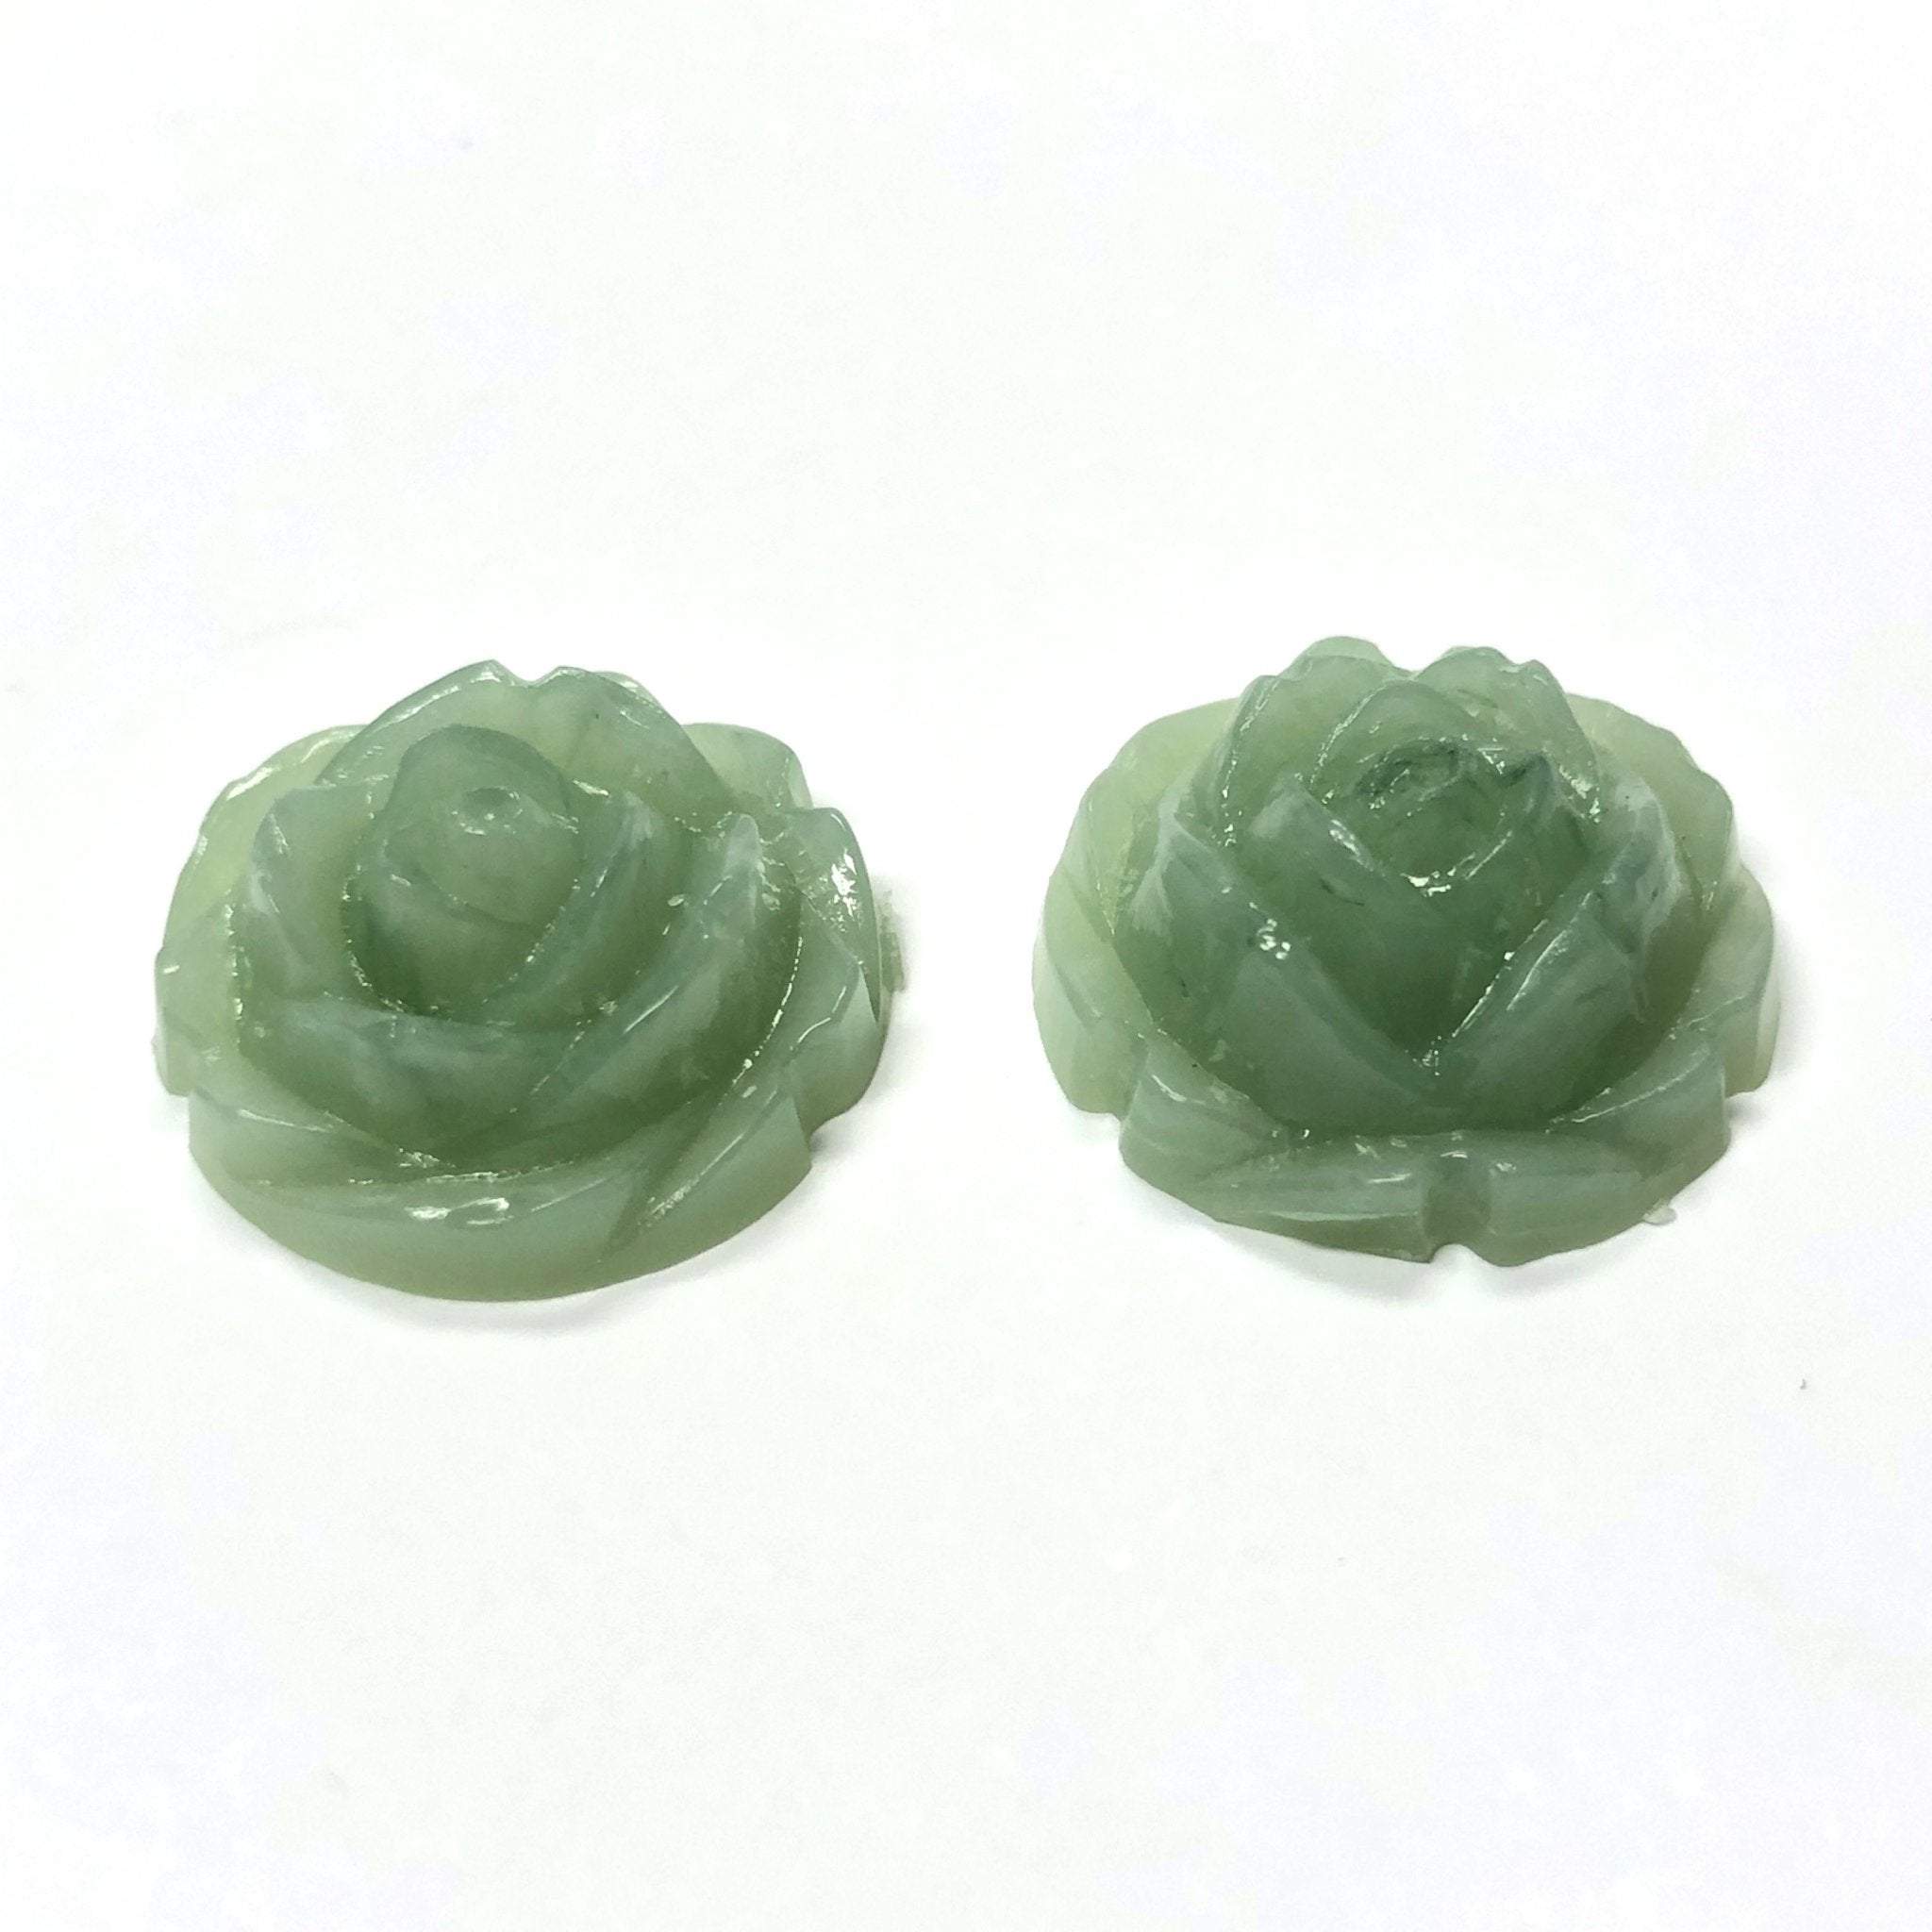 9MM Light Jade Green "Agate" Rosebud Acrylic Cab (144 pieces)